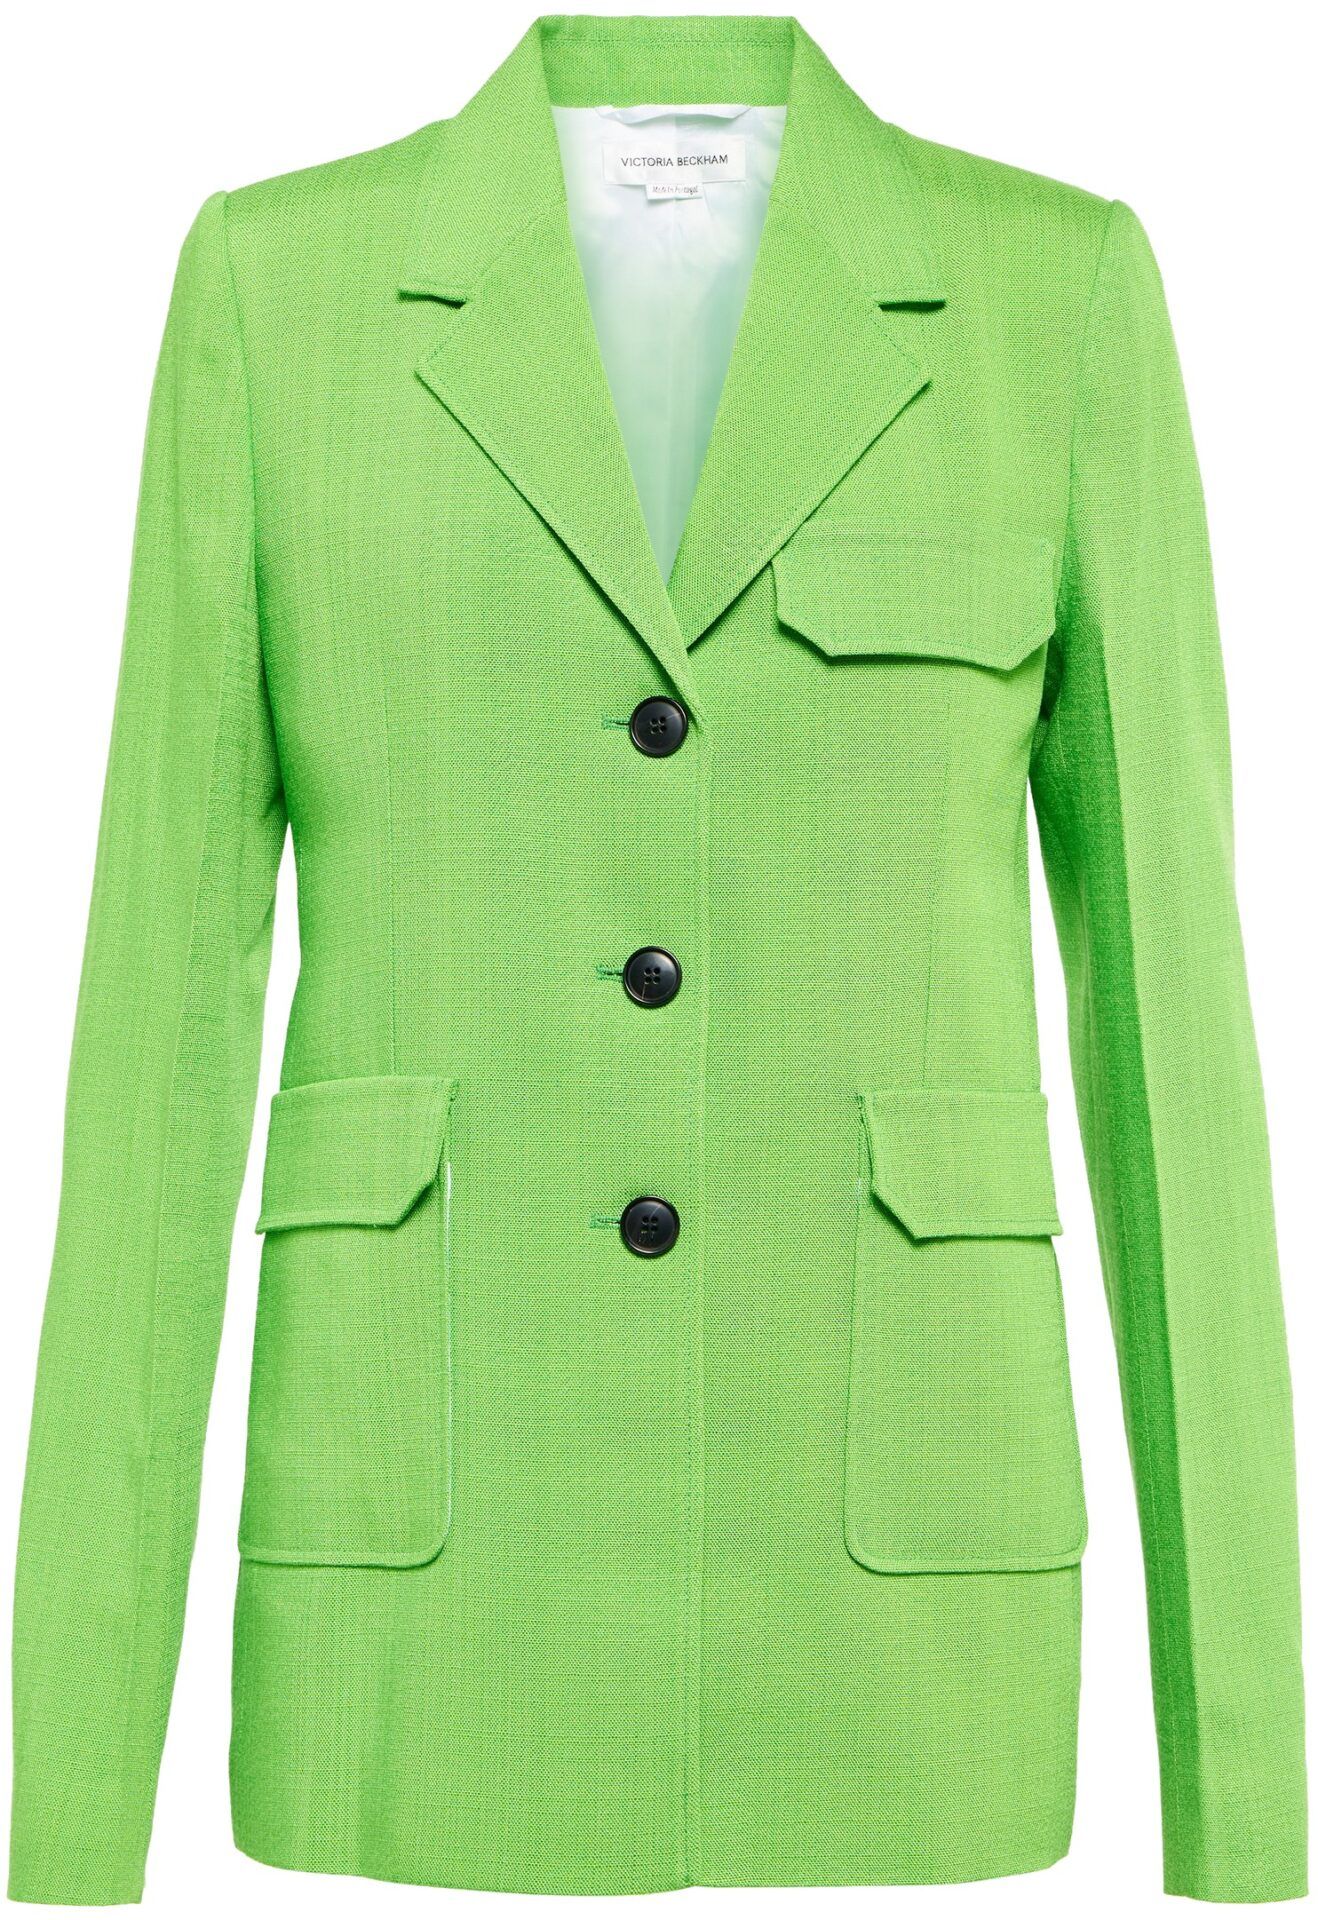 Jacket (Apple Green) | style